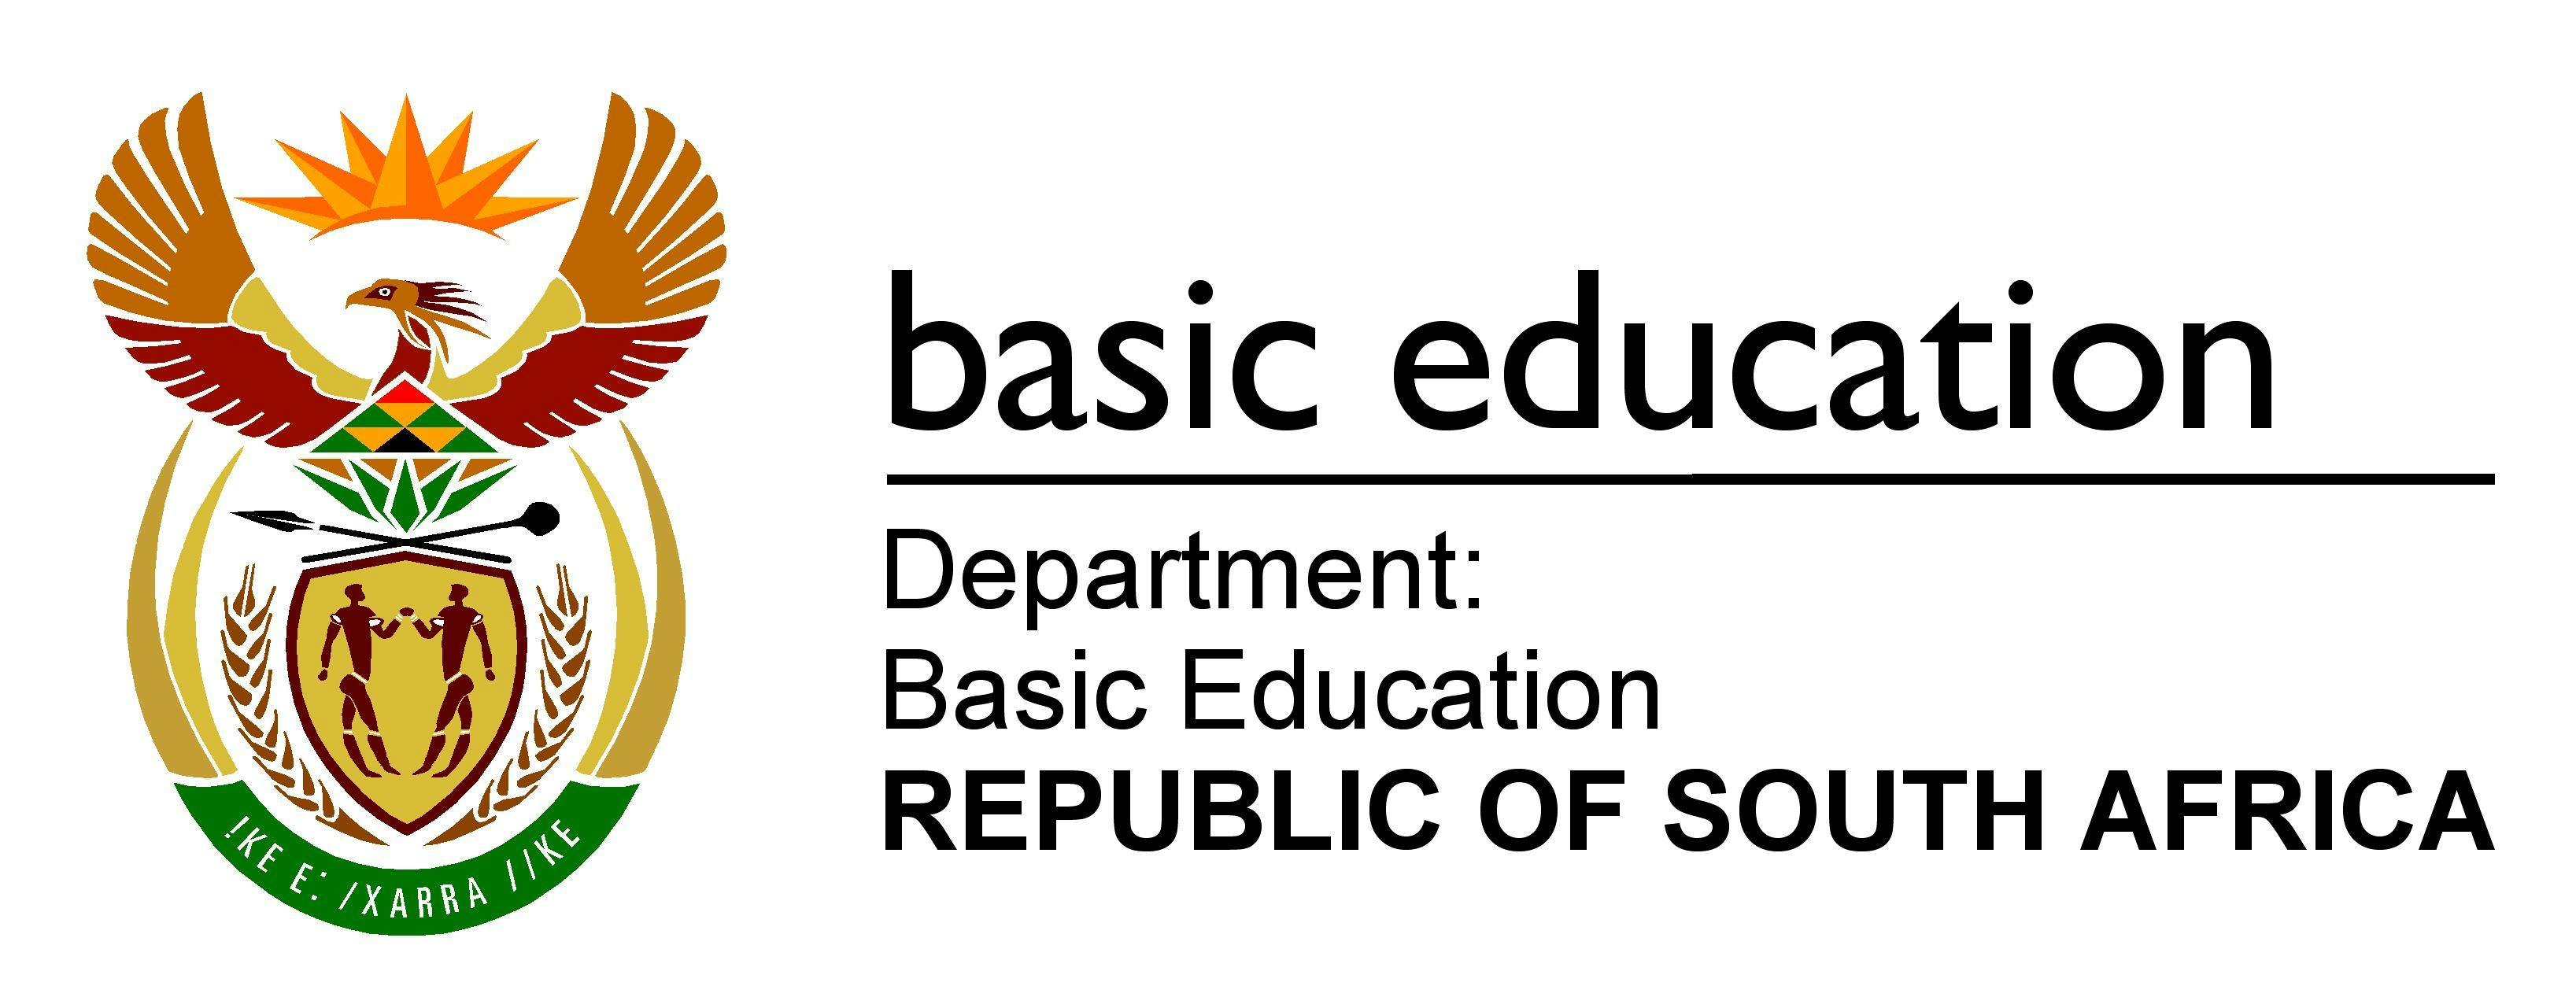 Dept of Basic Education